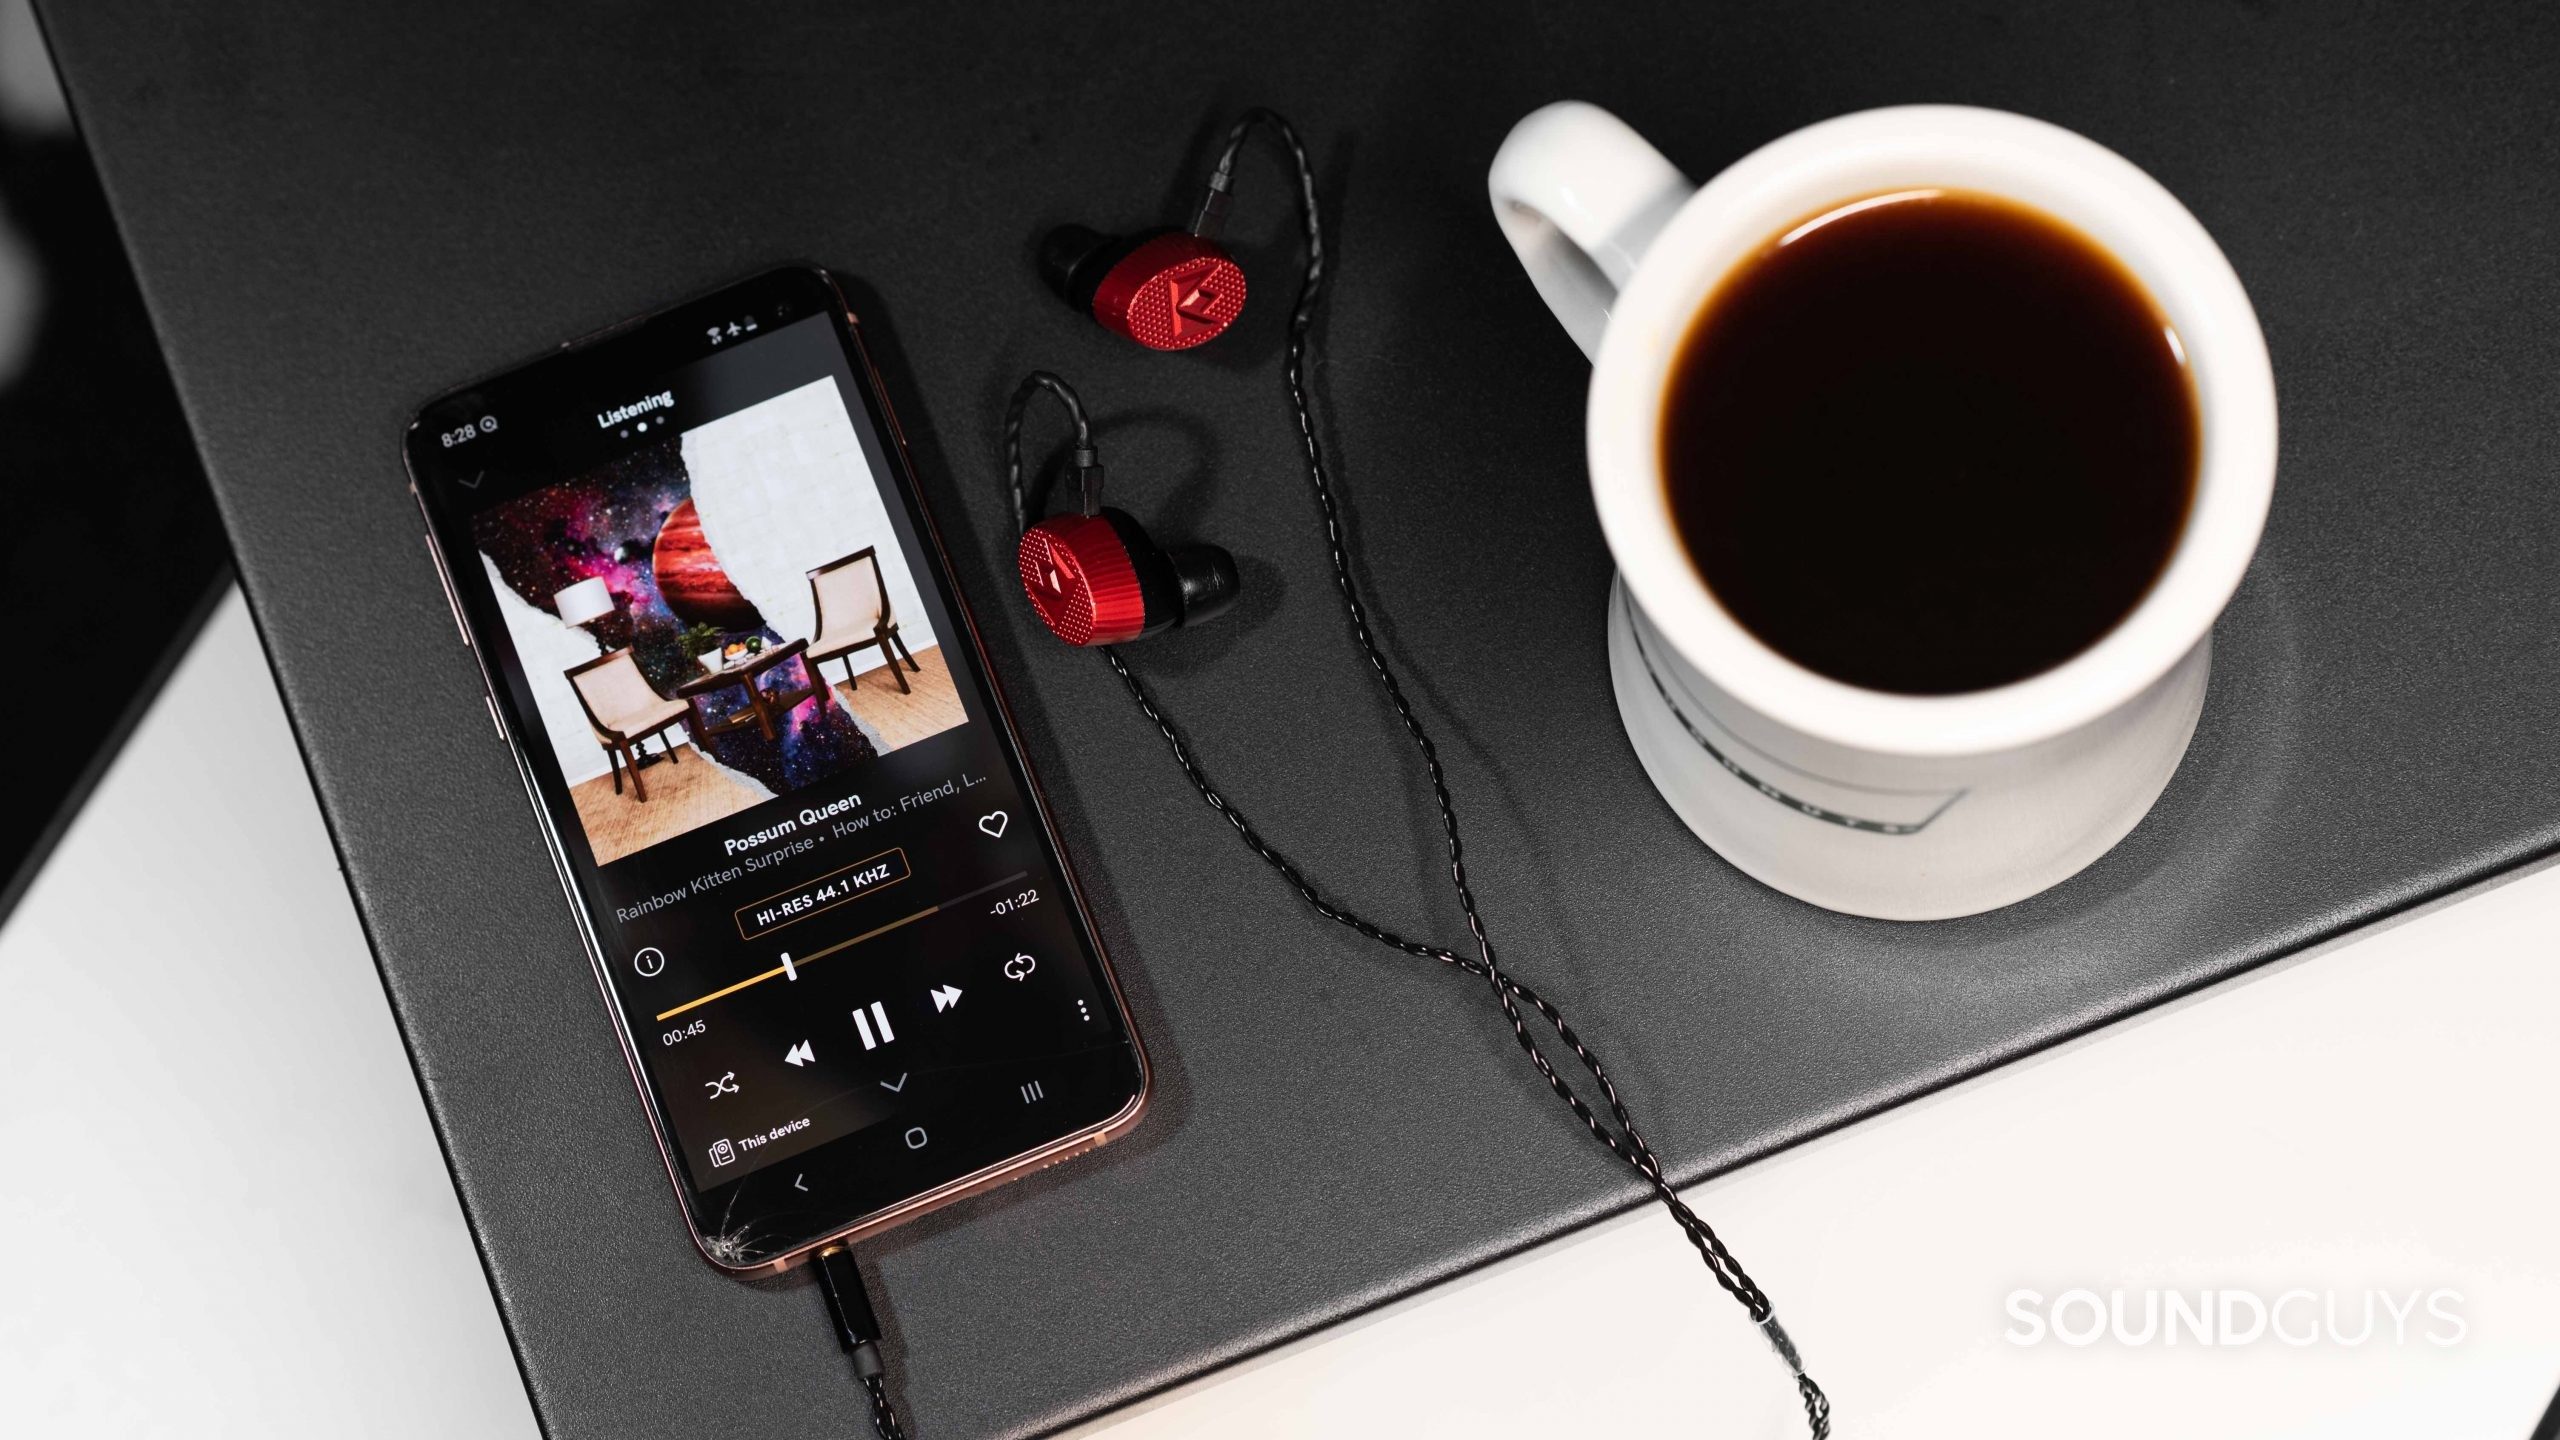 Tab Listening pada aplikasi layanan streaming musik Qobuz terbuka di smartphone Samsung Galaxy S10e di sebelah sepasang Massdrop x Noble Kaiser 10 IEM dan secangkir kopi.